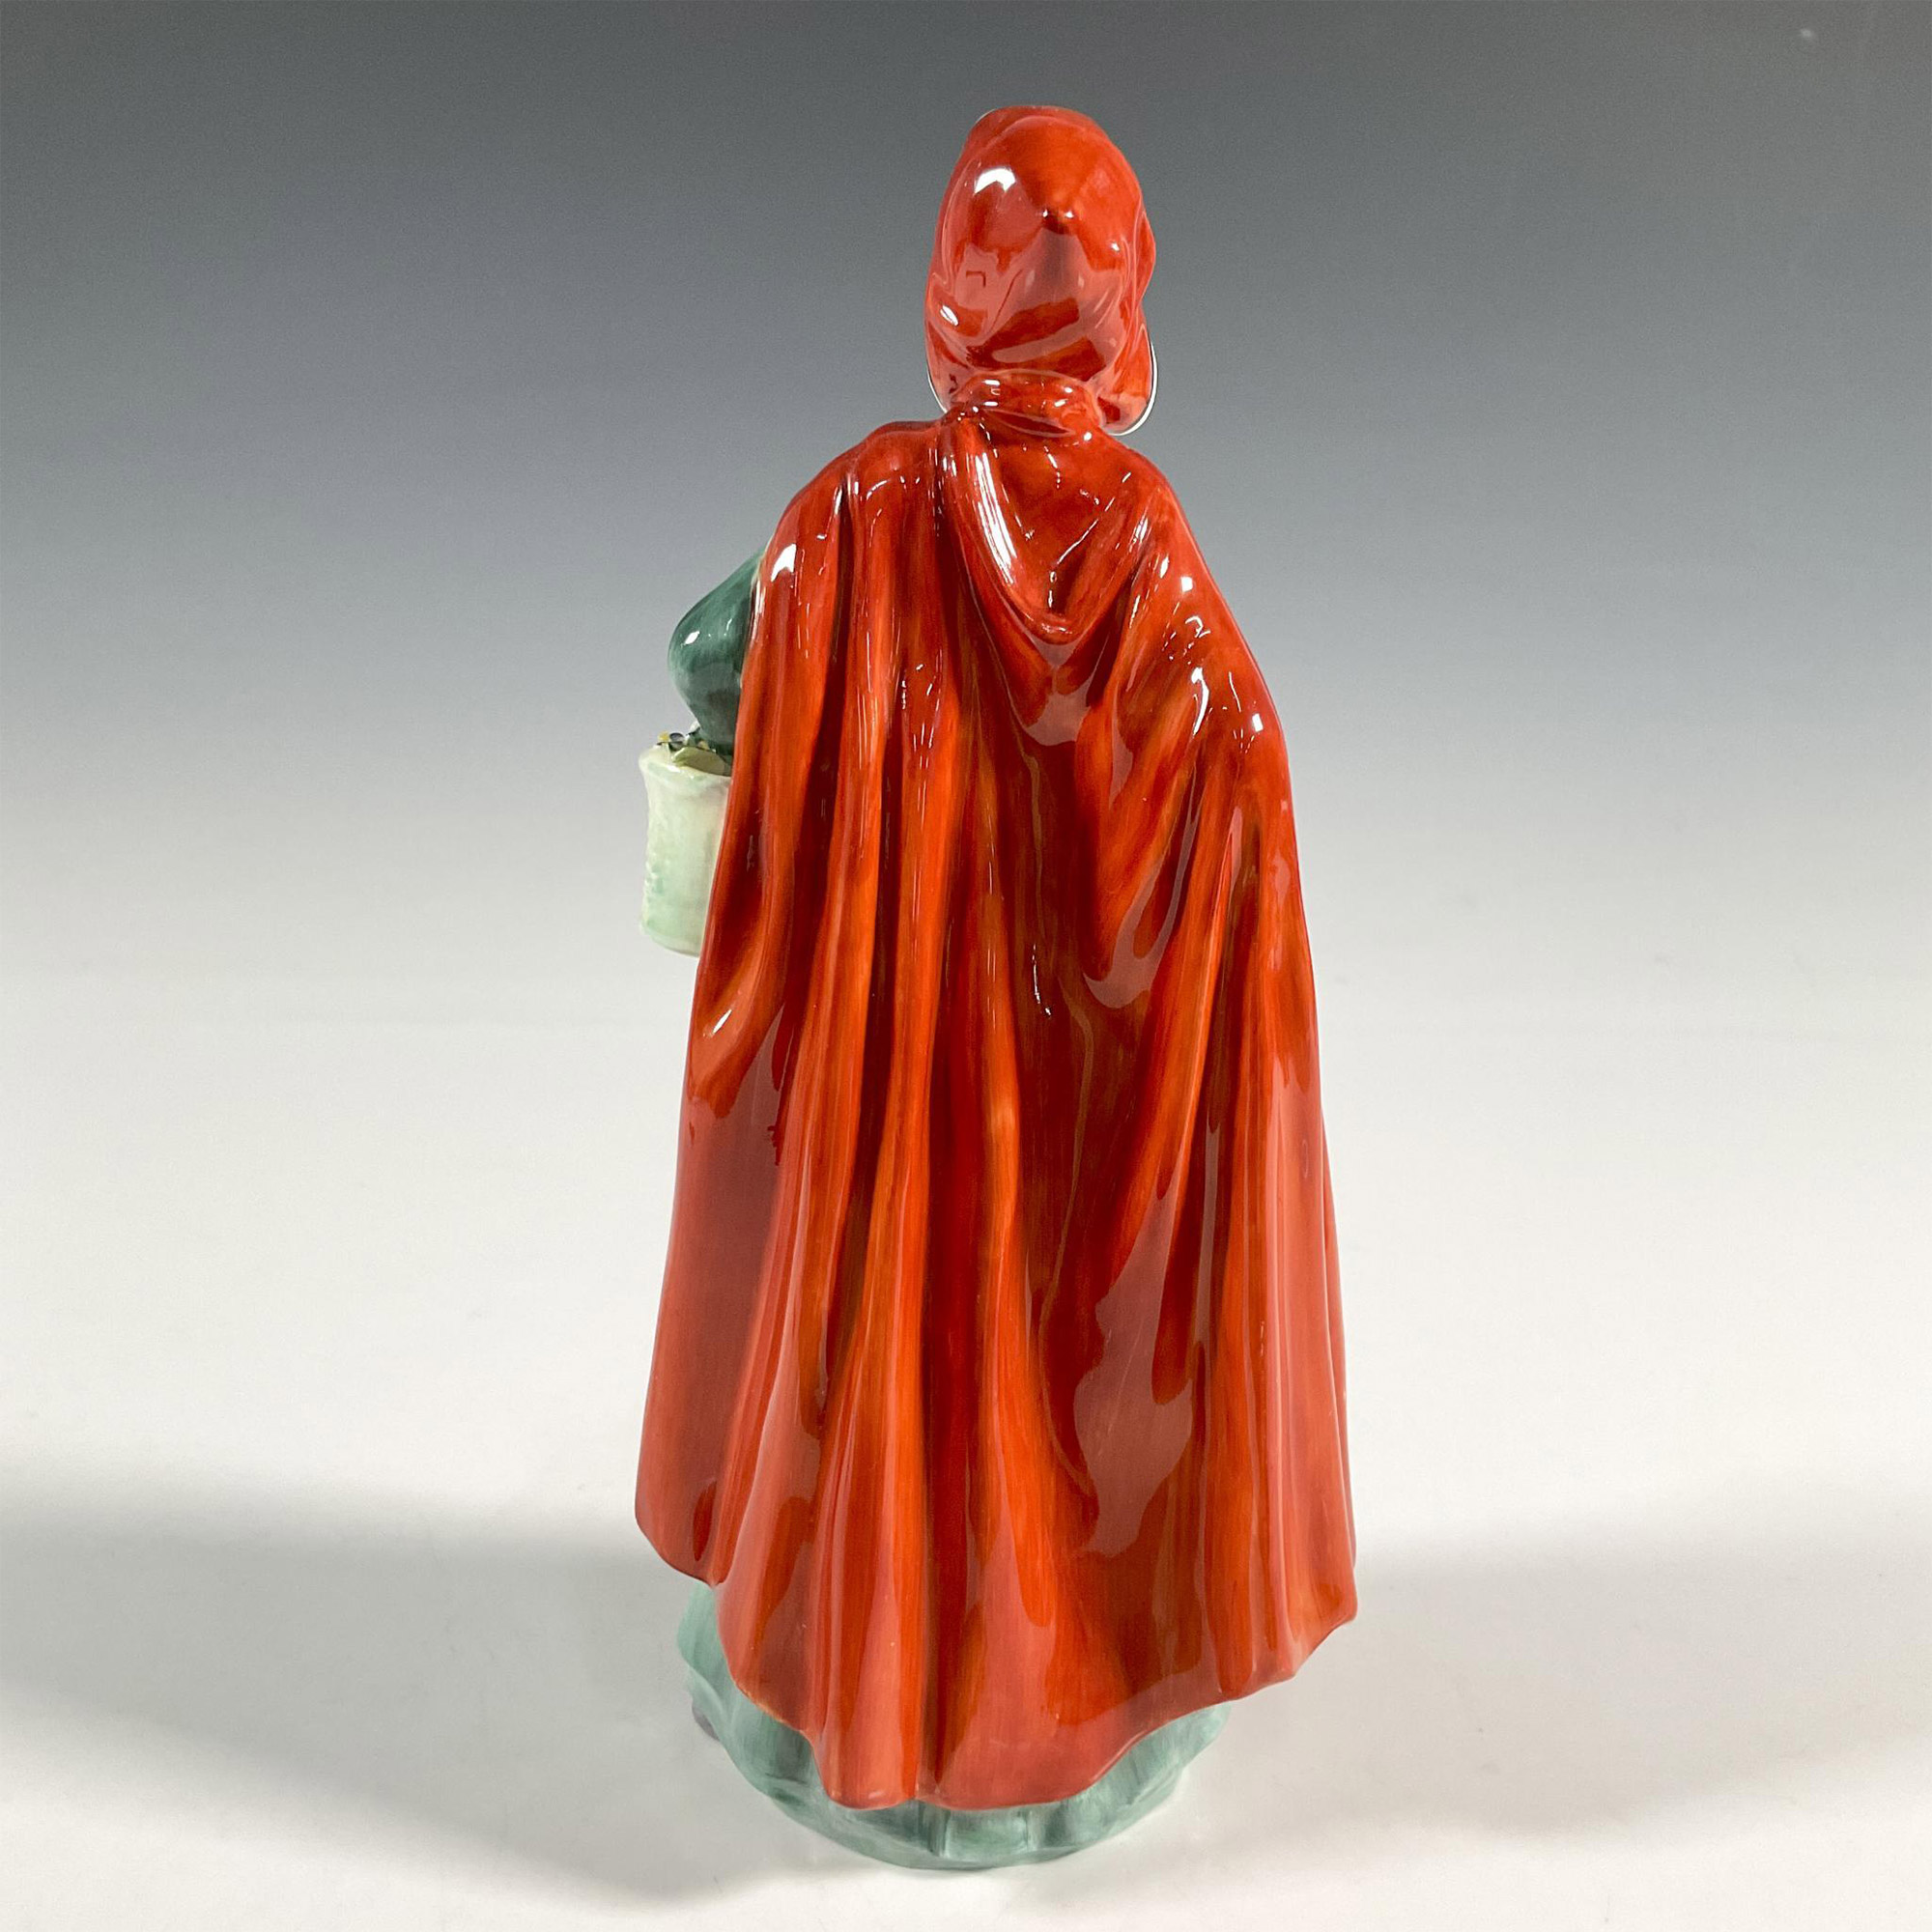 Jean HN2032 - Royal Doulton Figurine - Image 2 of 3